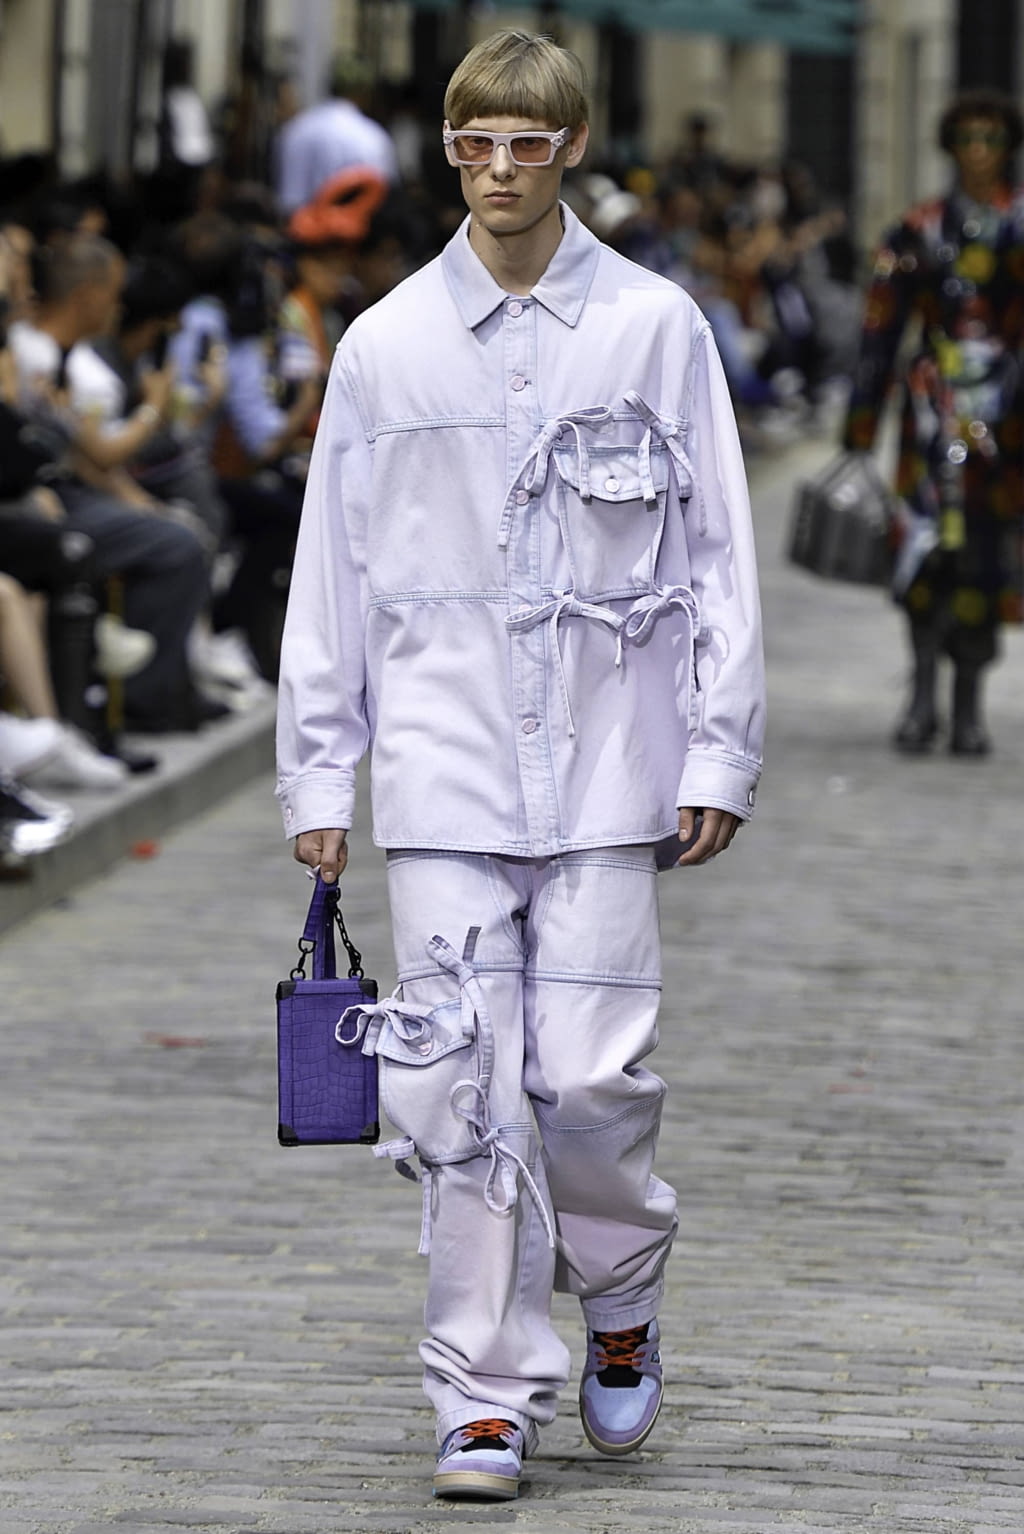 Louis Vuitton Menswear Spring '19 at Paris Fashion Week [PHOTOS